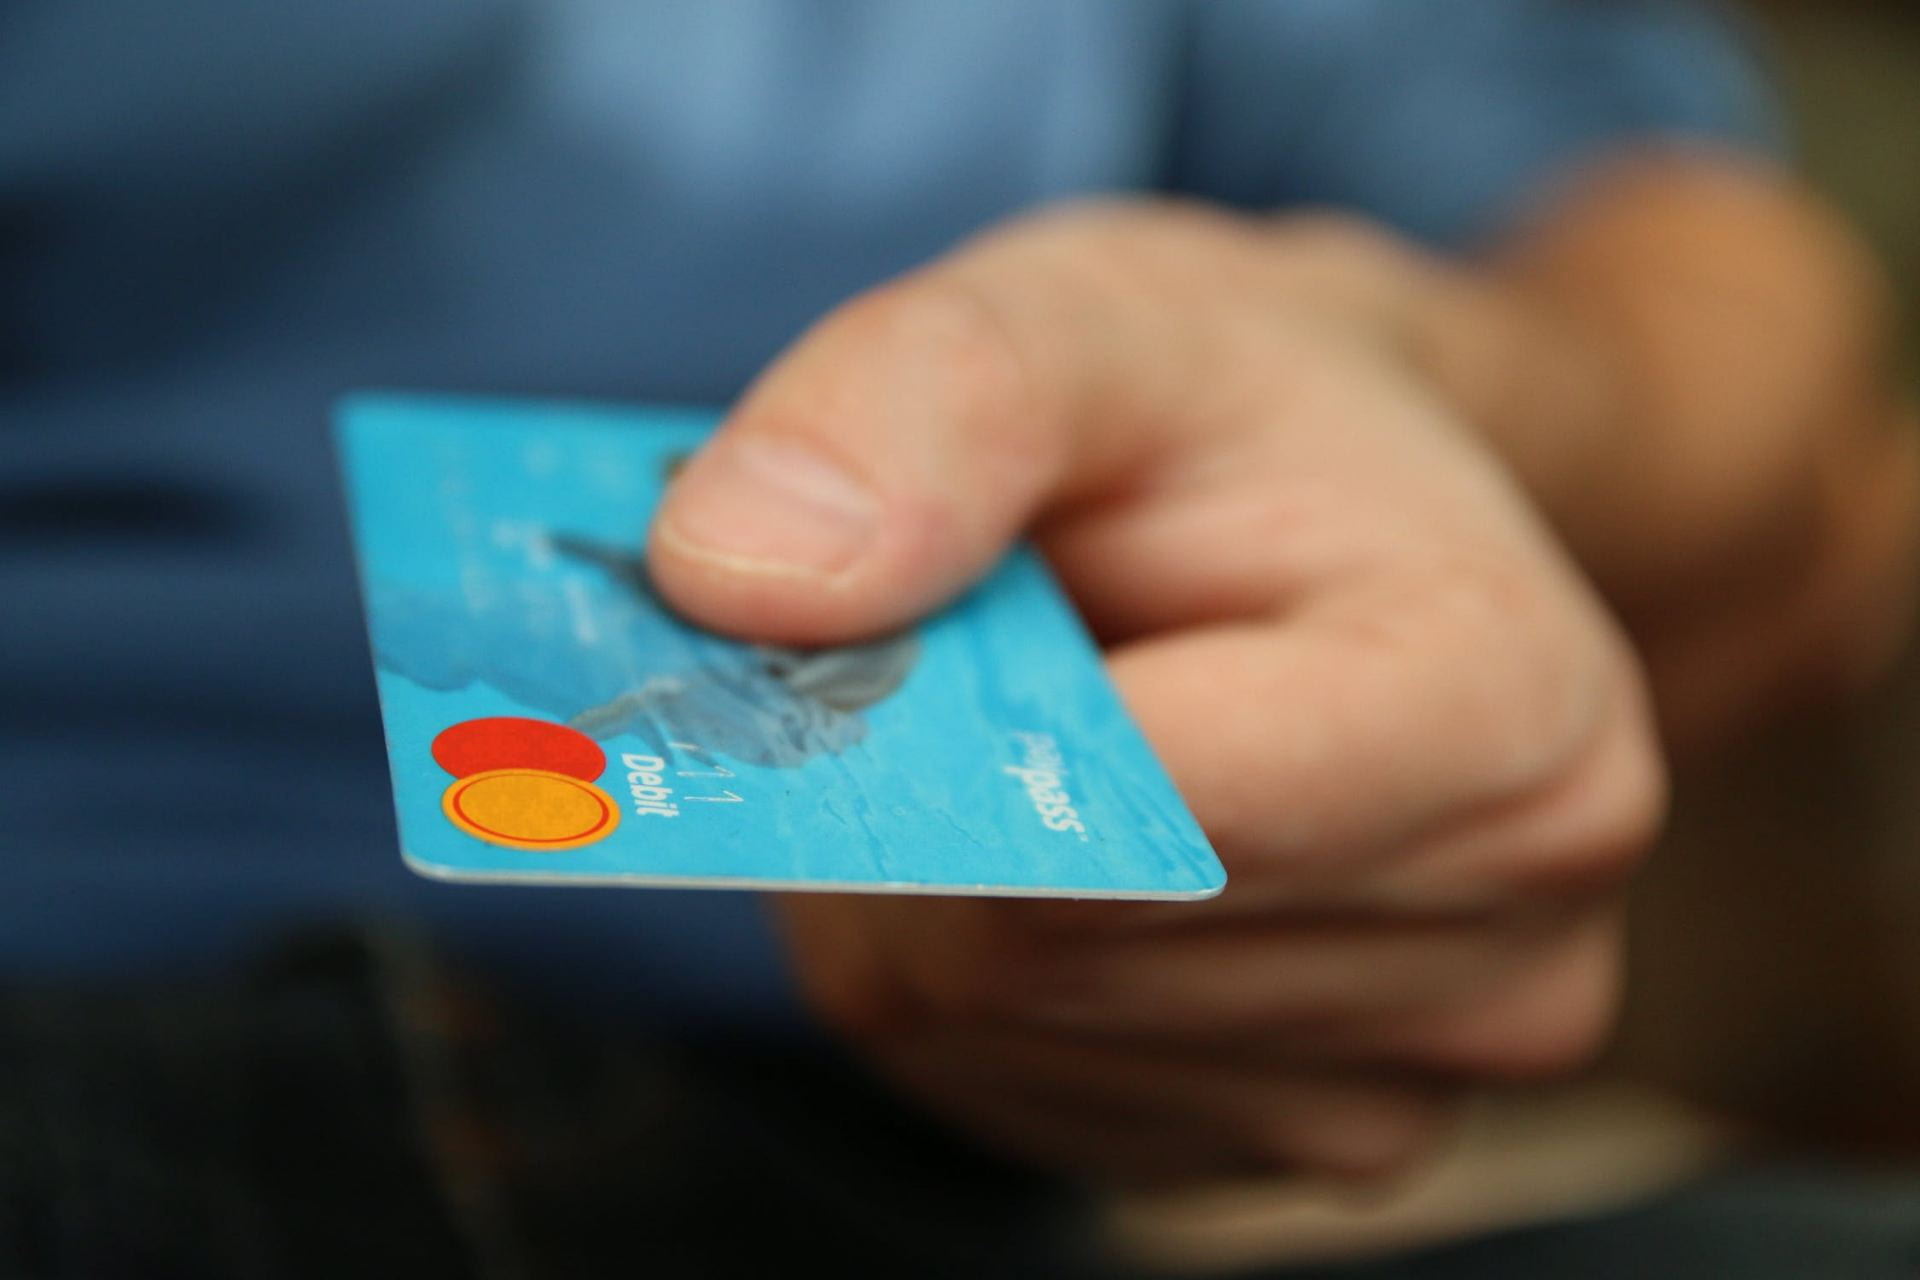 A hand holding a debit card forward.